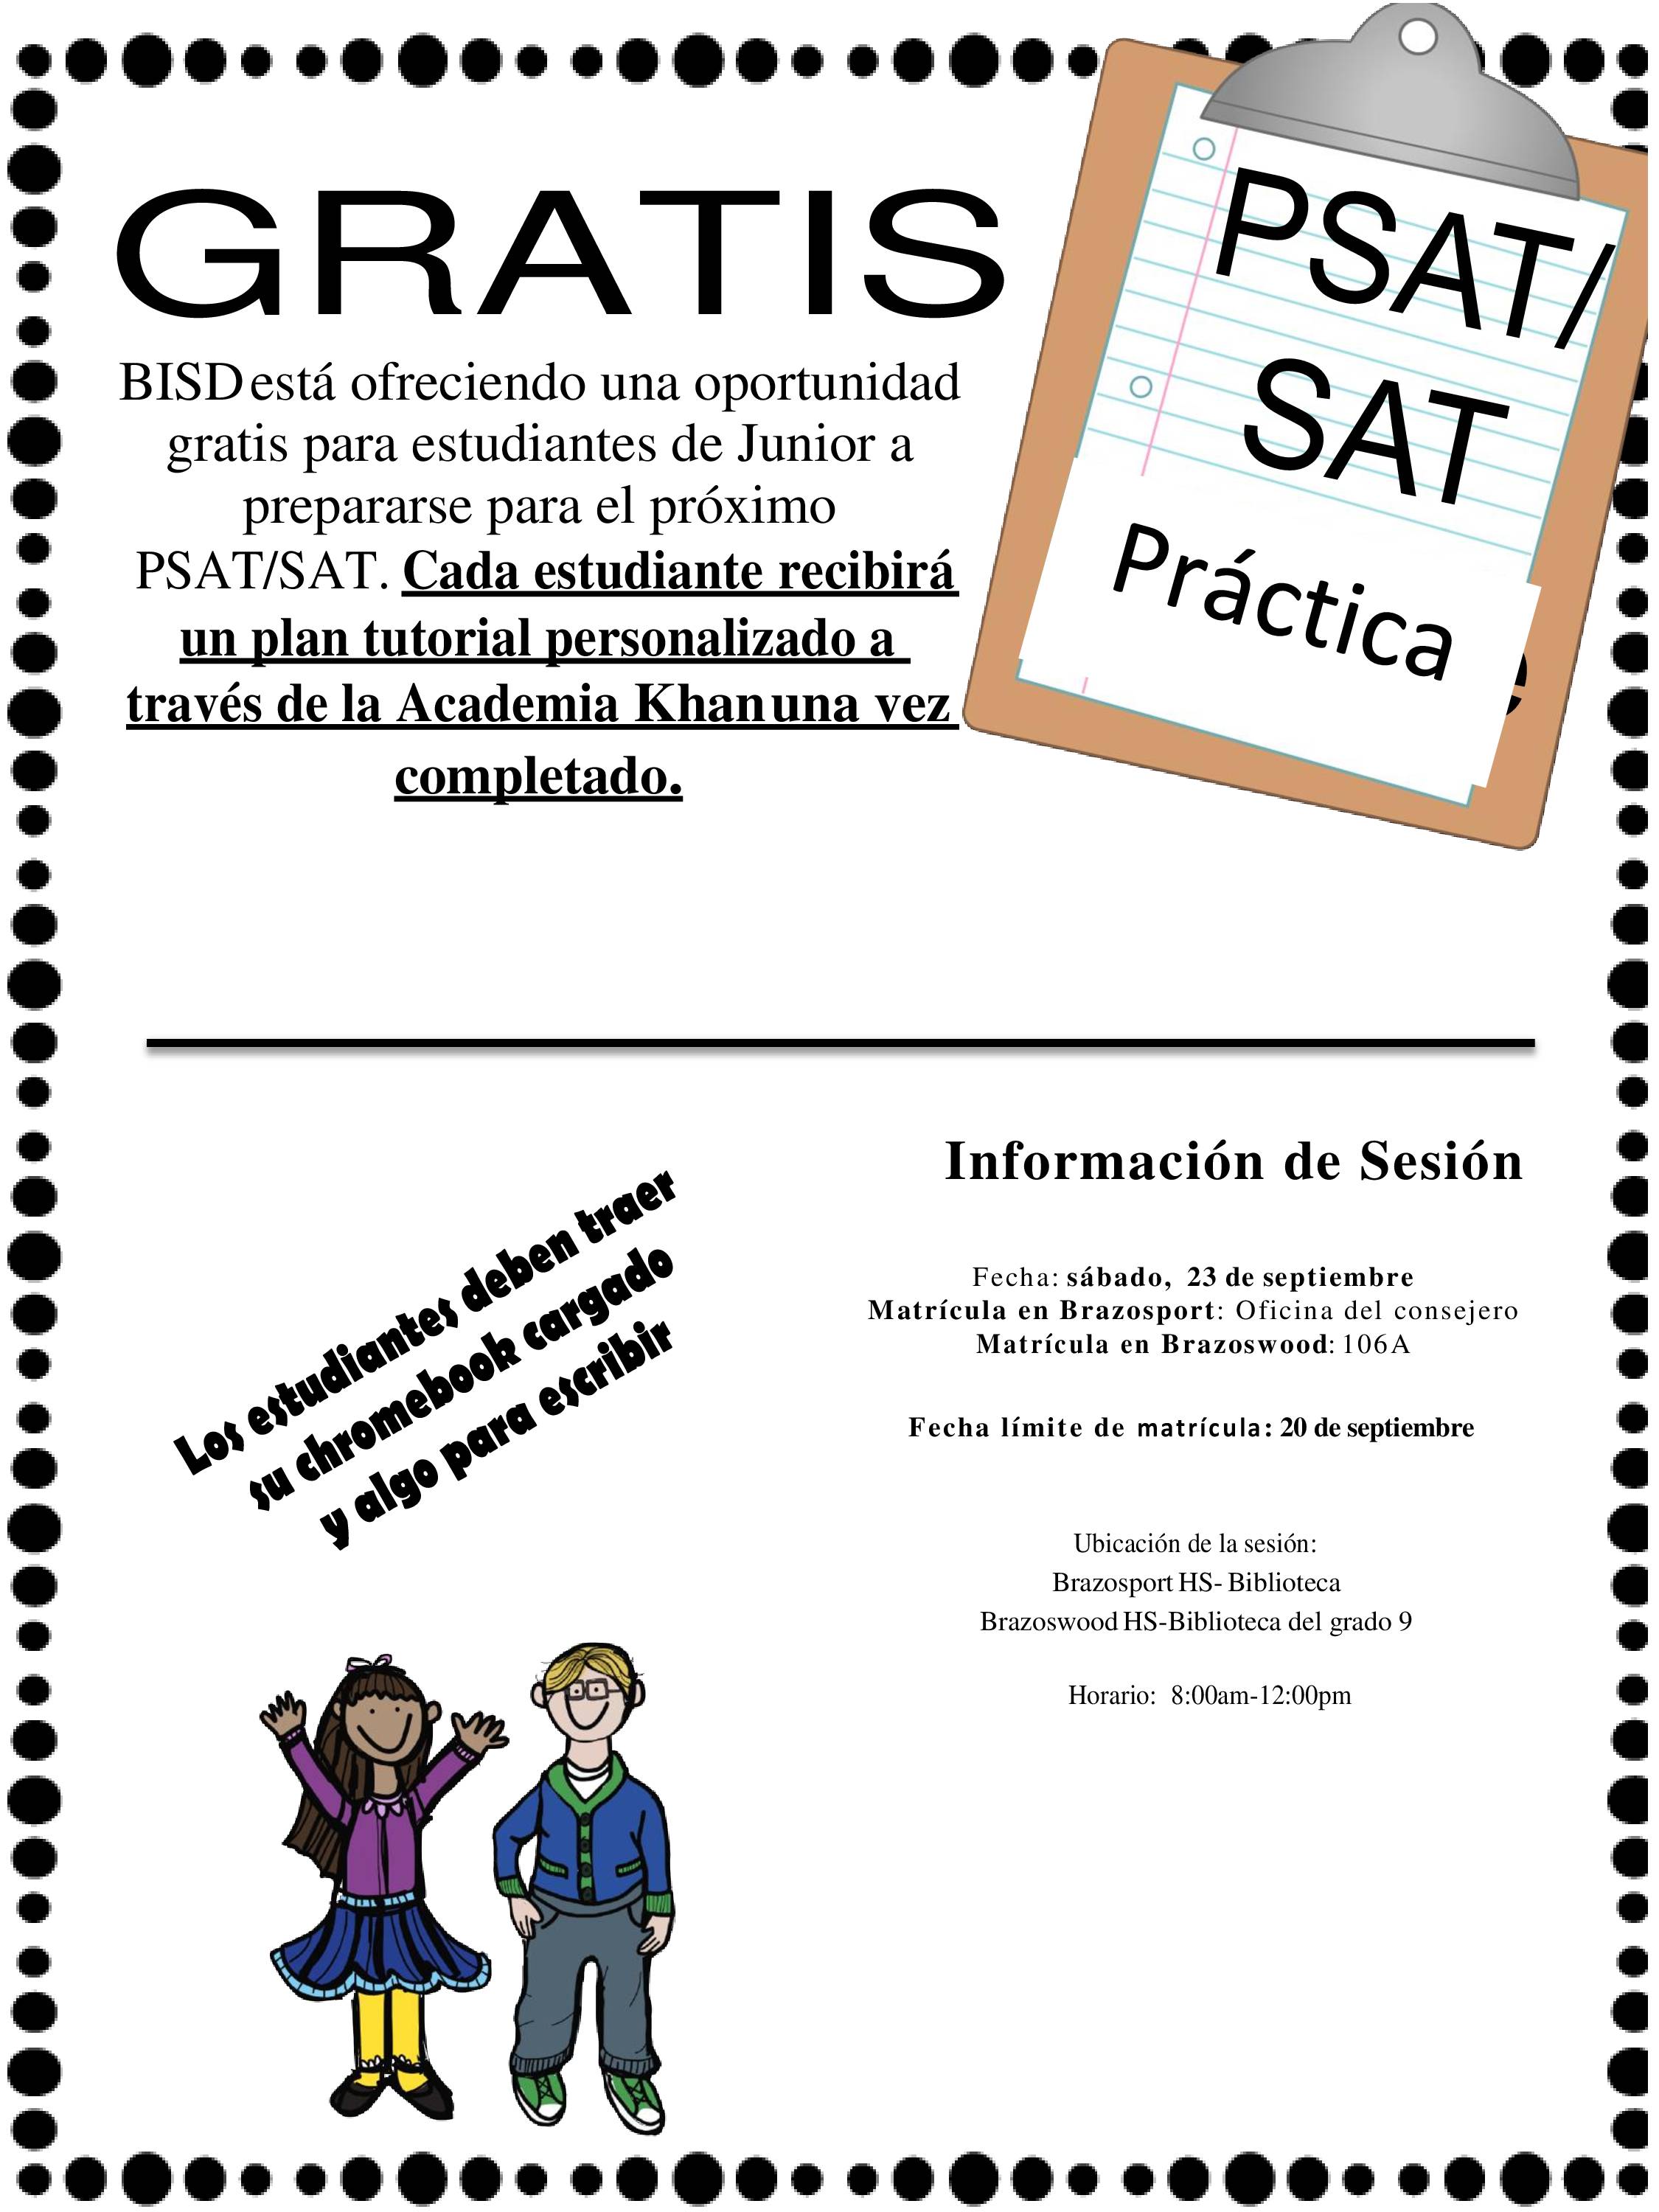 Information Flyer in Spanish